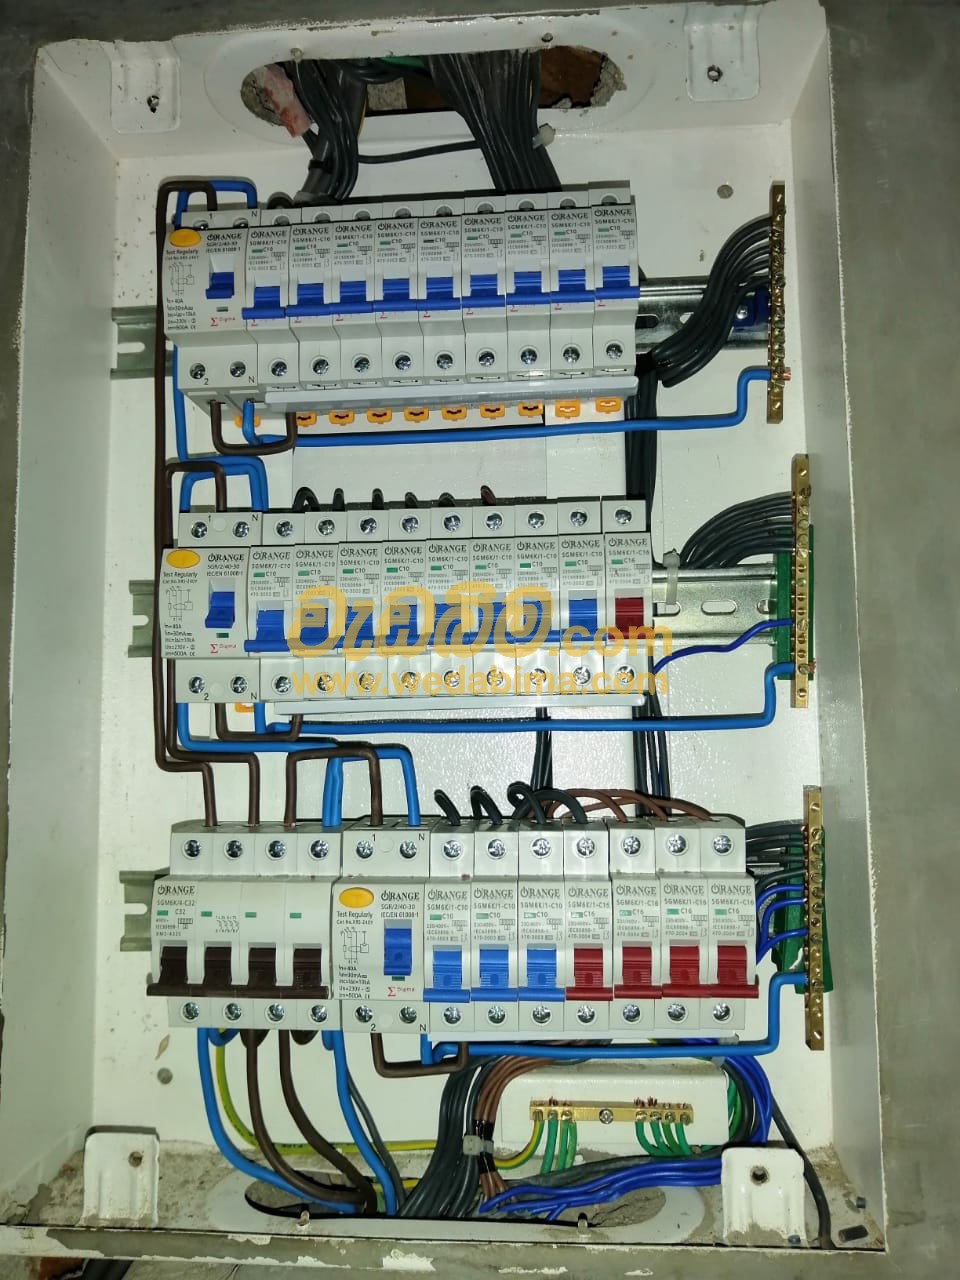 Switch boards work in Rathnapura